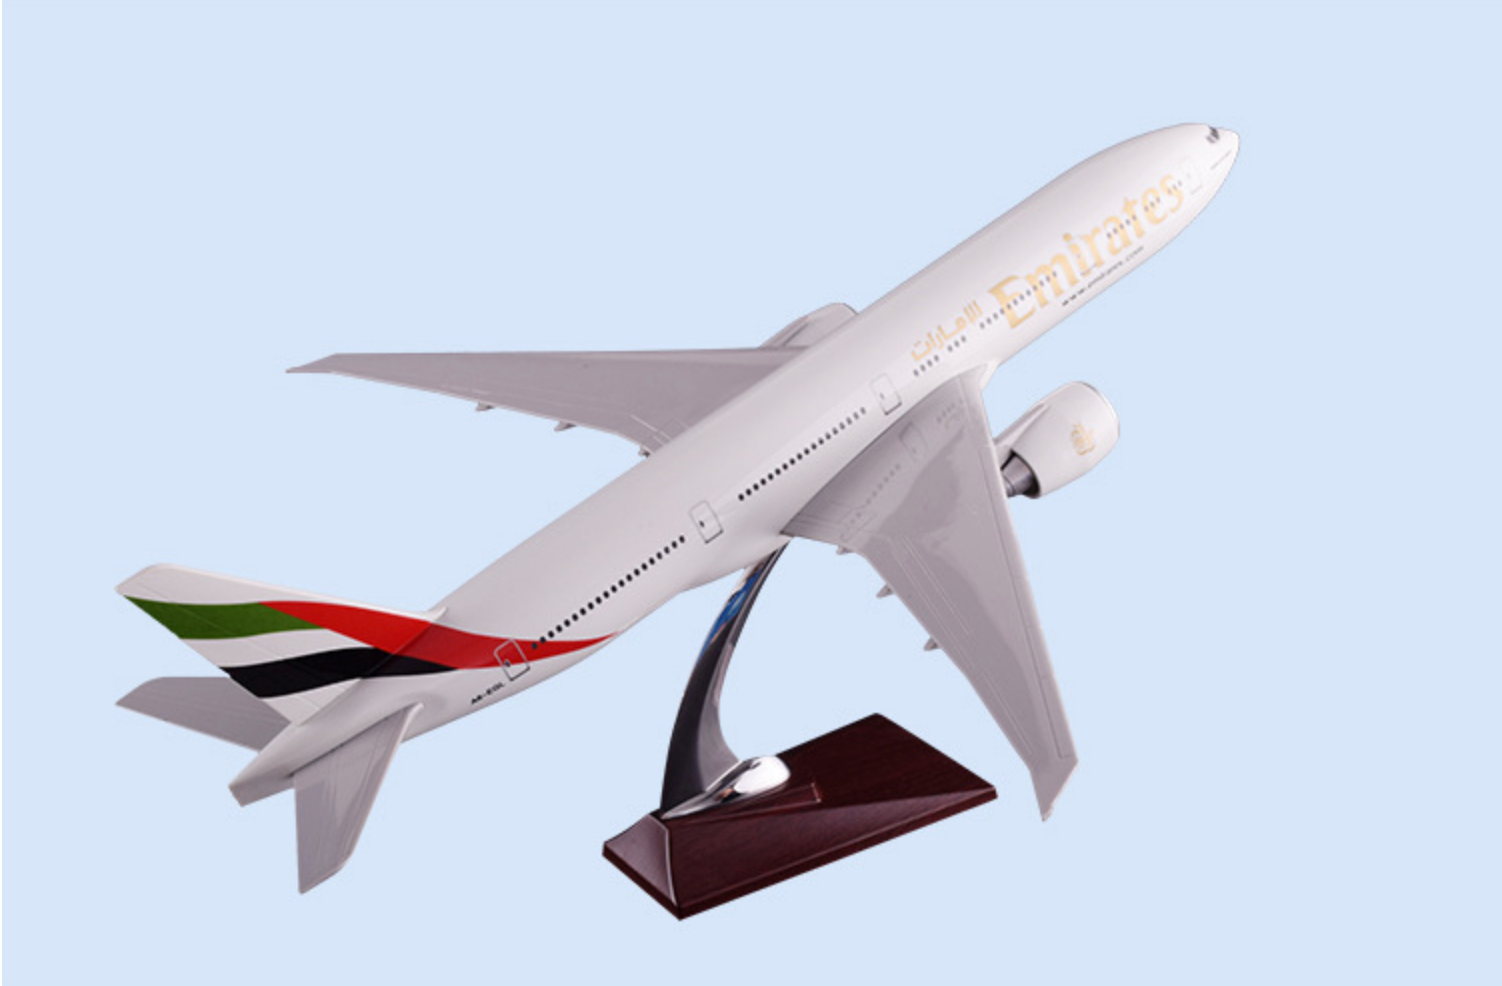 Emirates Boeing 777 Airplane Model (Handmade 47CM)